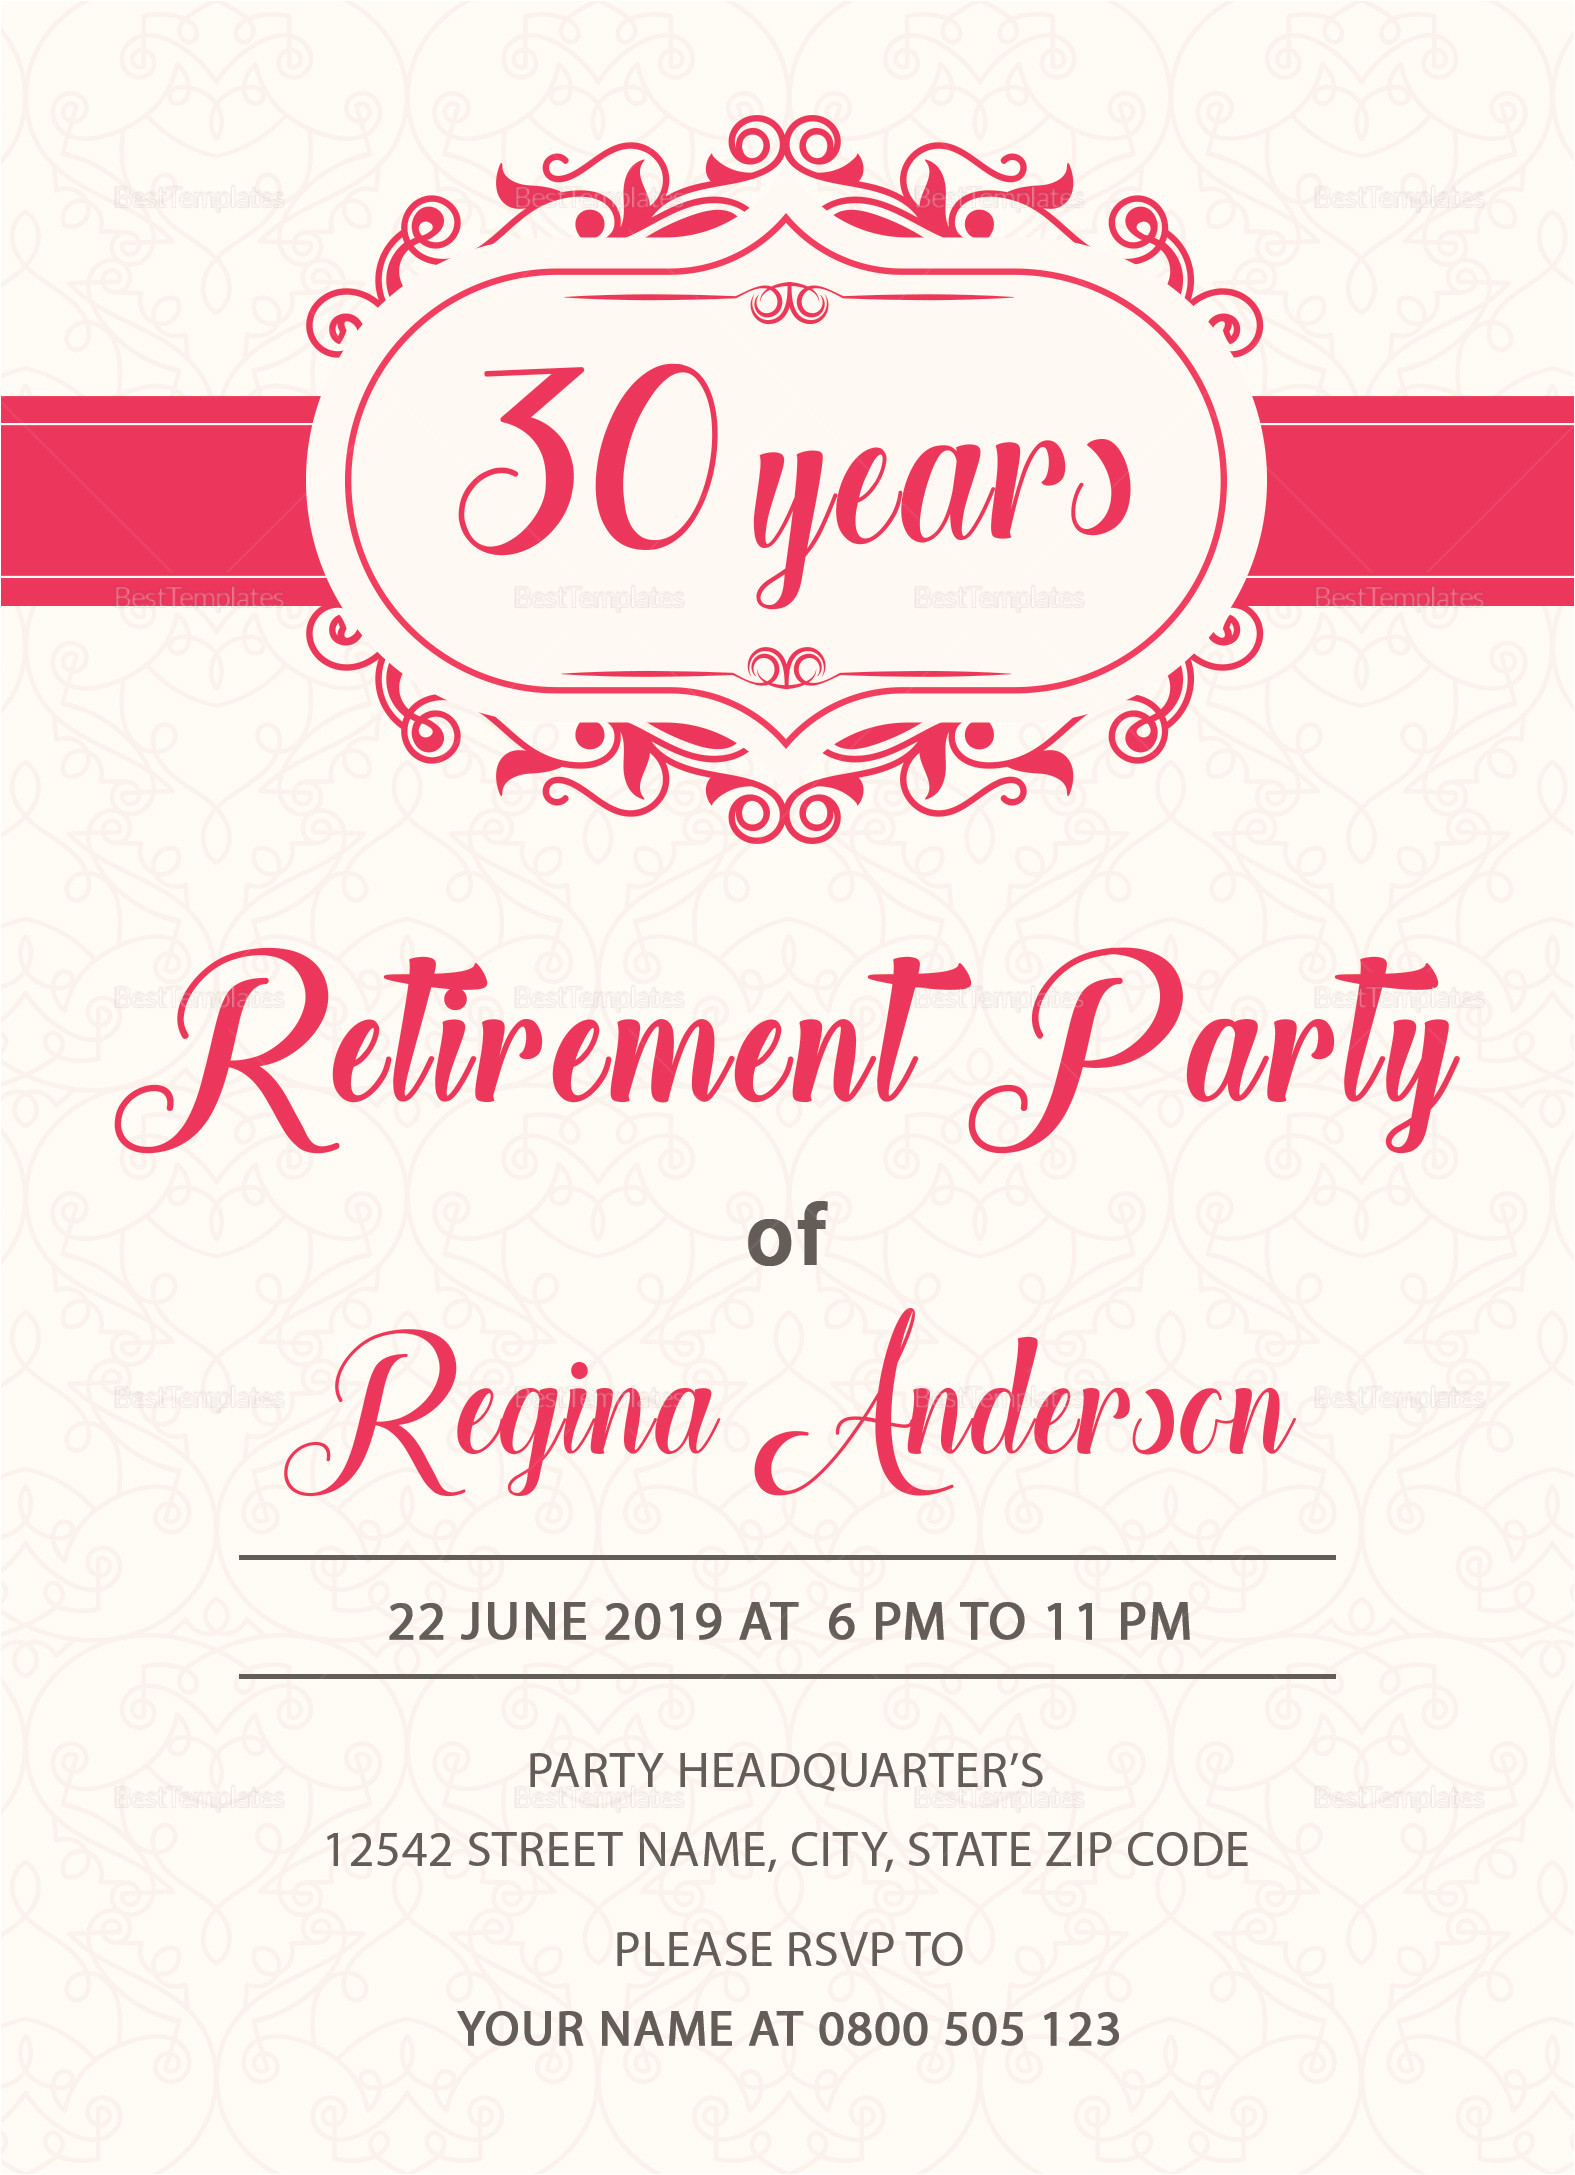 sample retirement party invitation